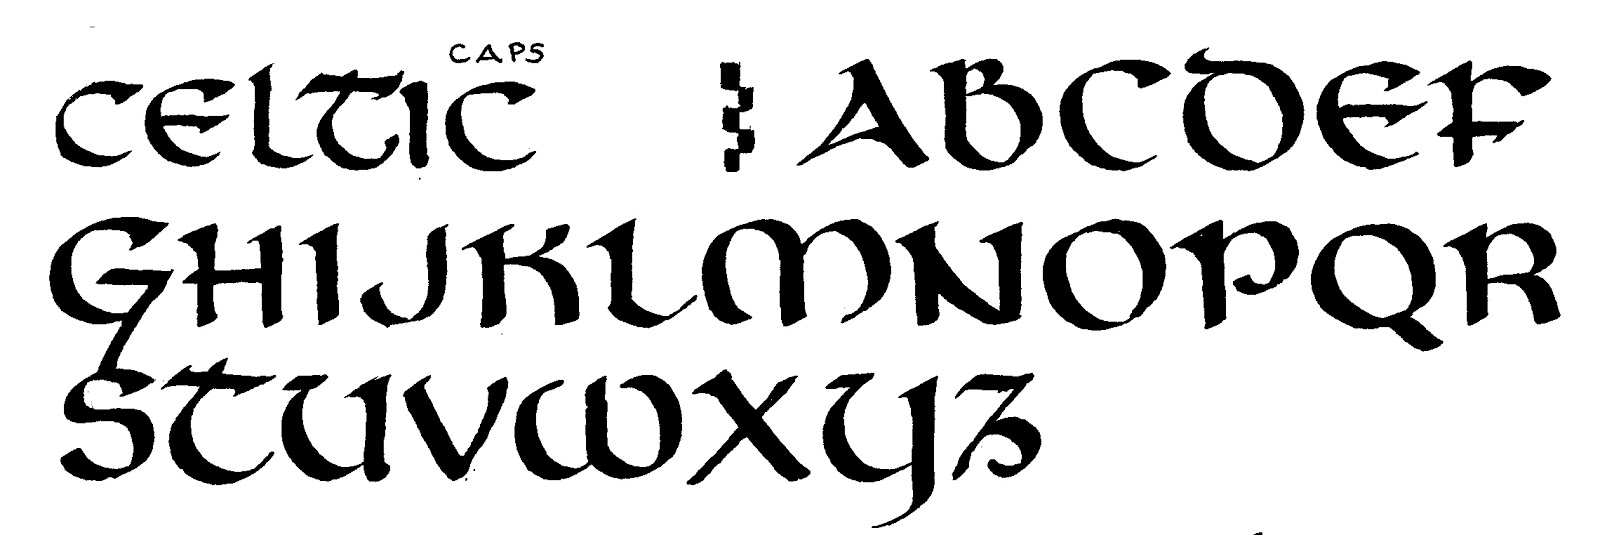 Celtic Calligraphy Alphabet 